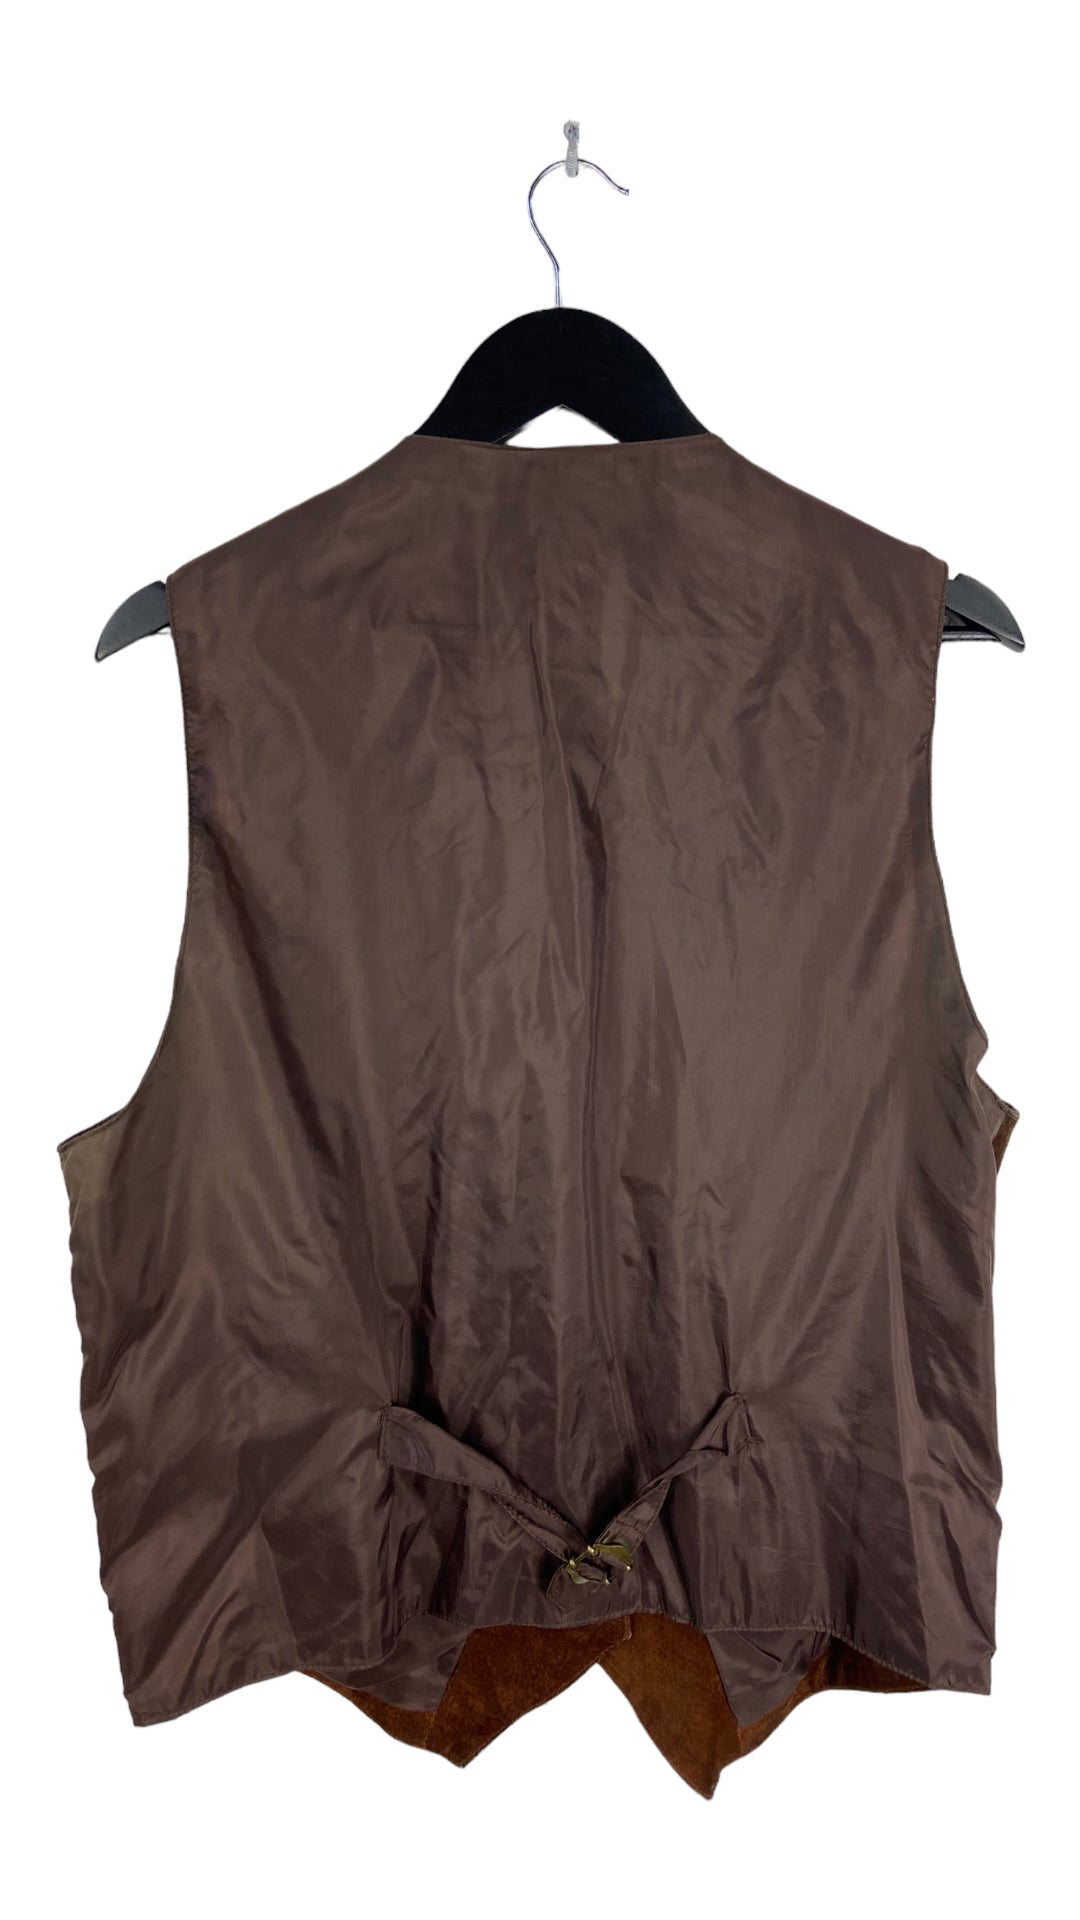 VTG Brown Leather Vest Sz M